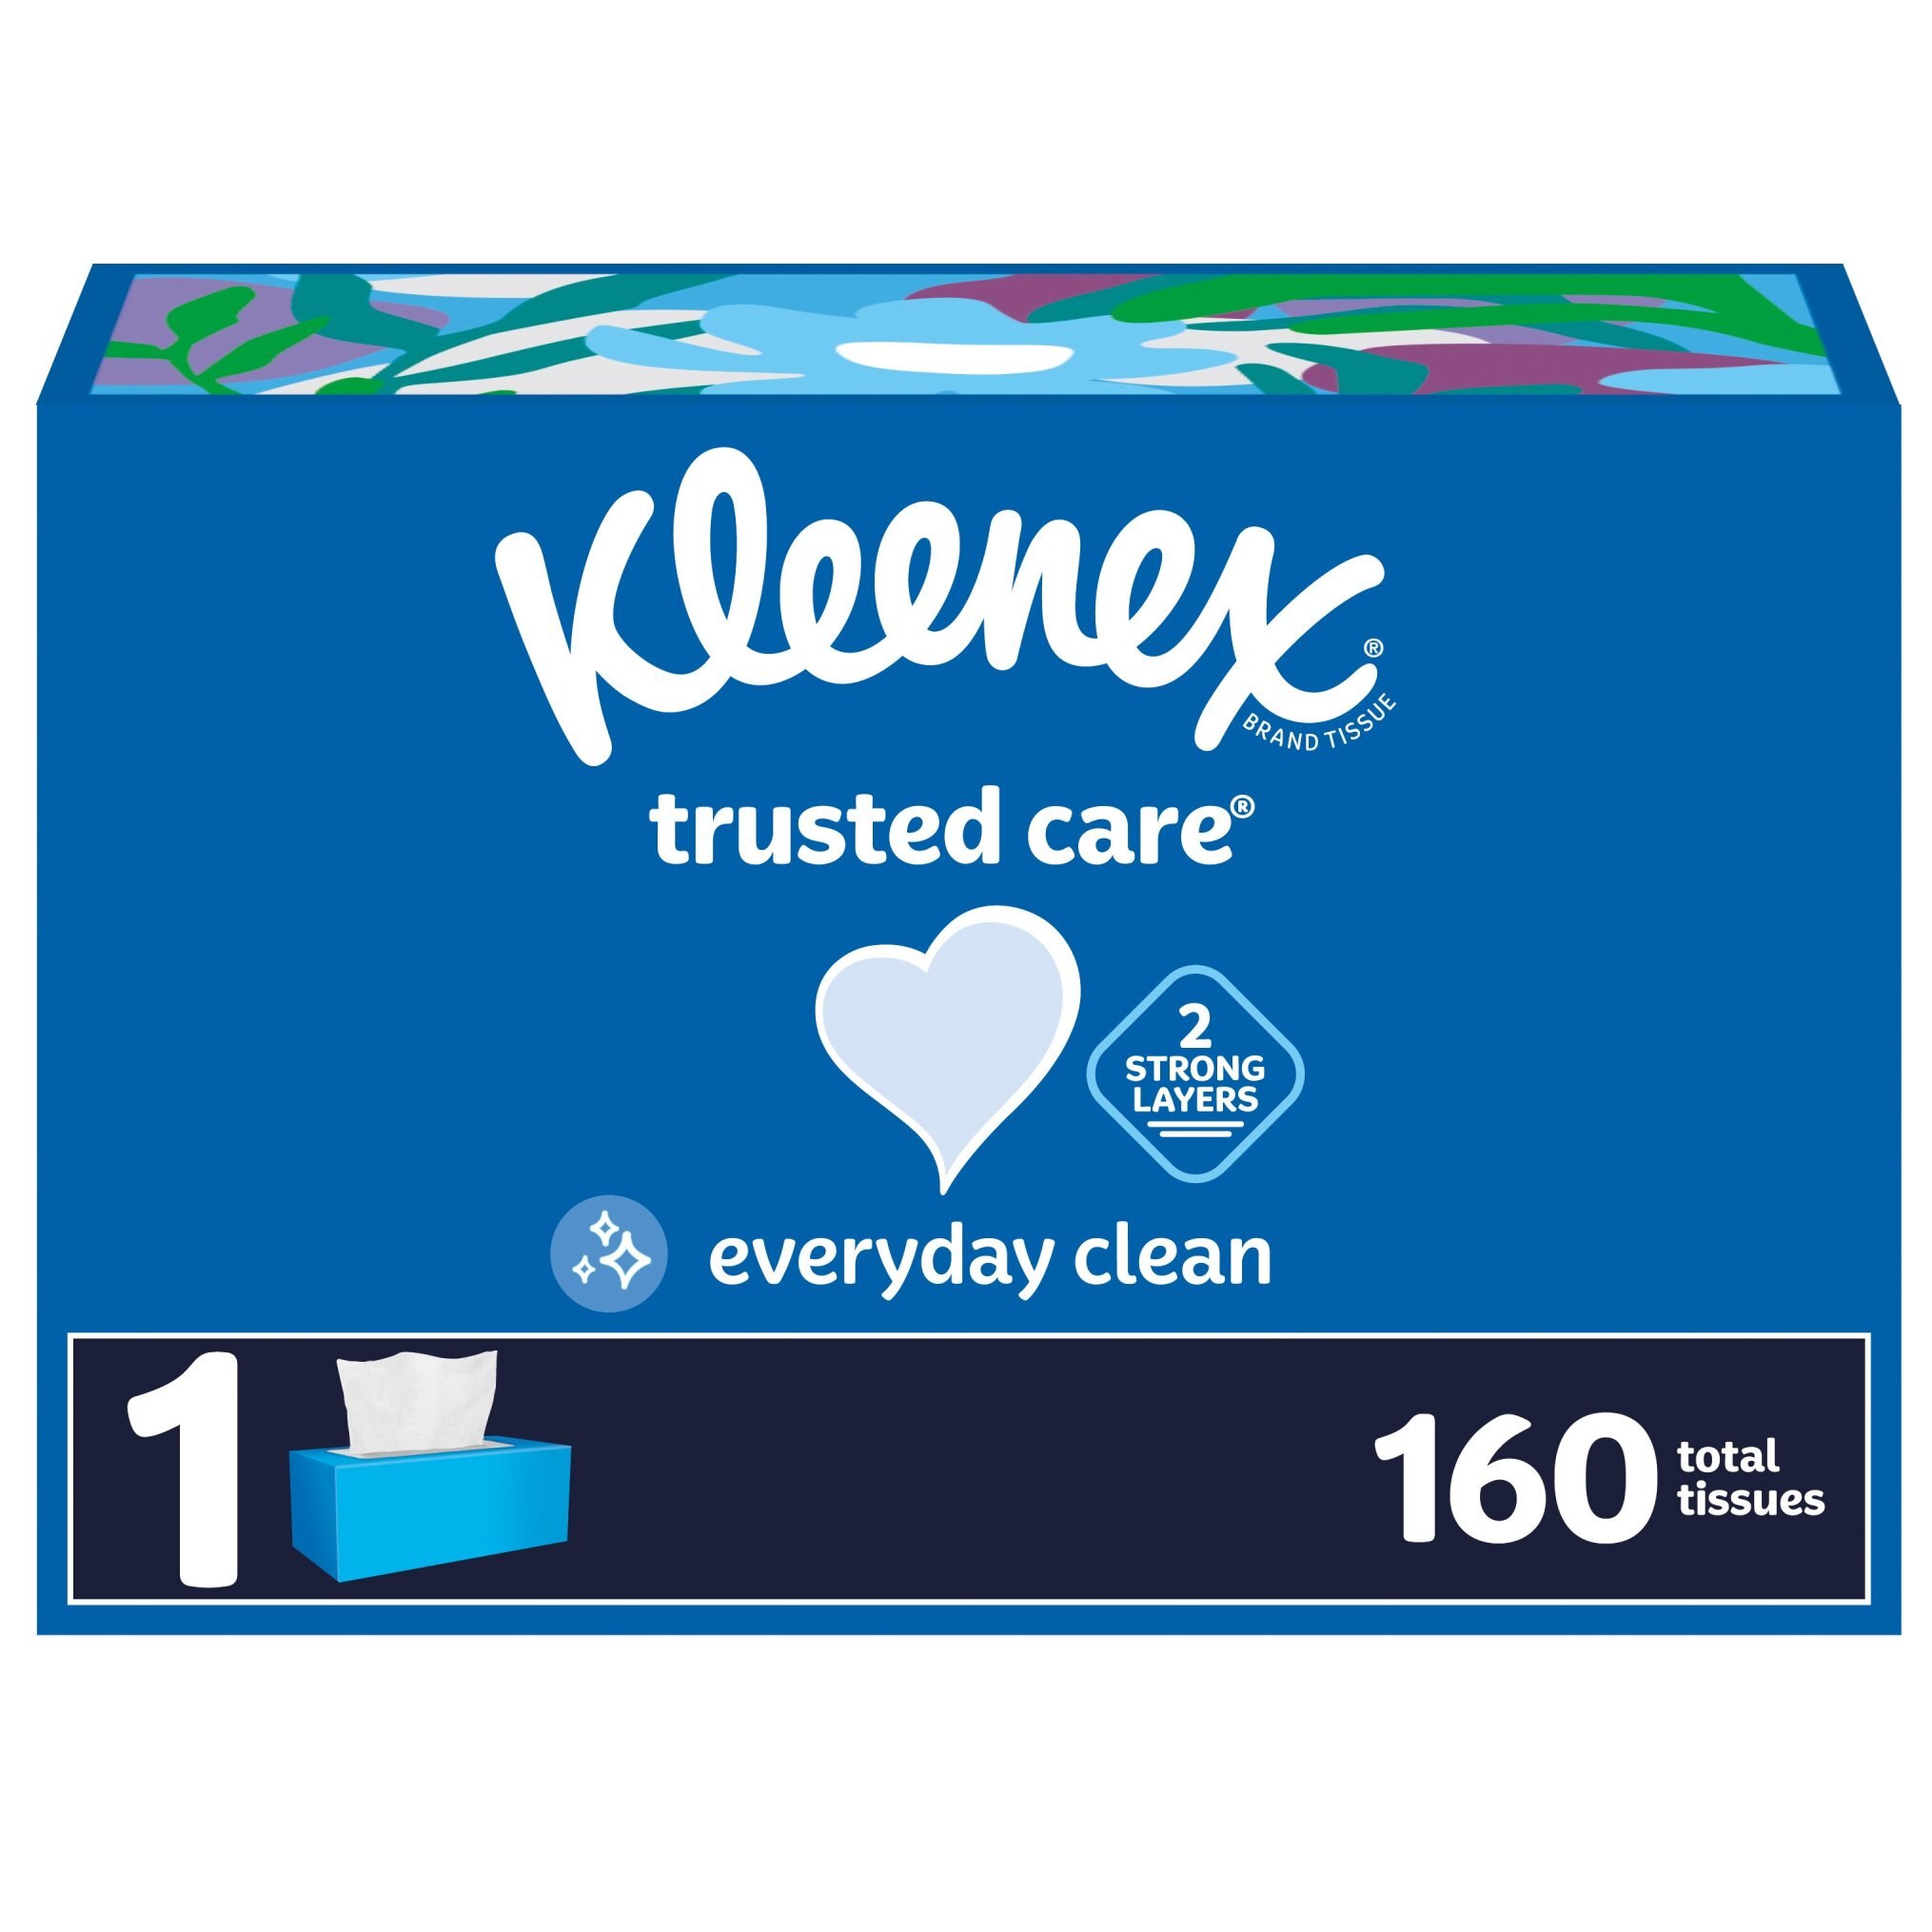 Kleenex Trusted Care Facial Tissues, 1 Flat Box, 160 Tissues per Box, 2-Ply